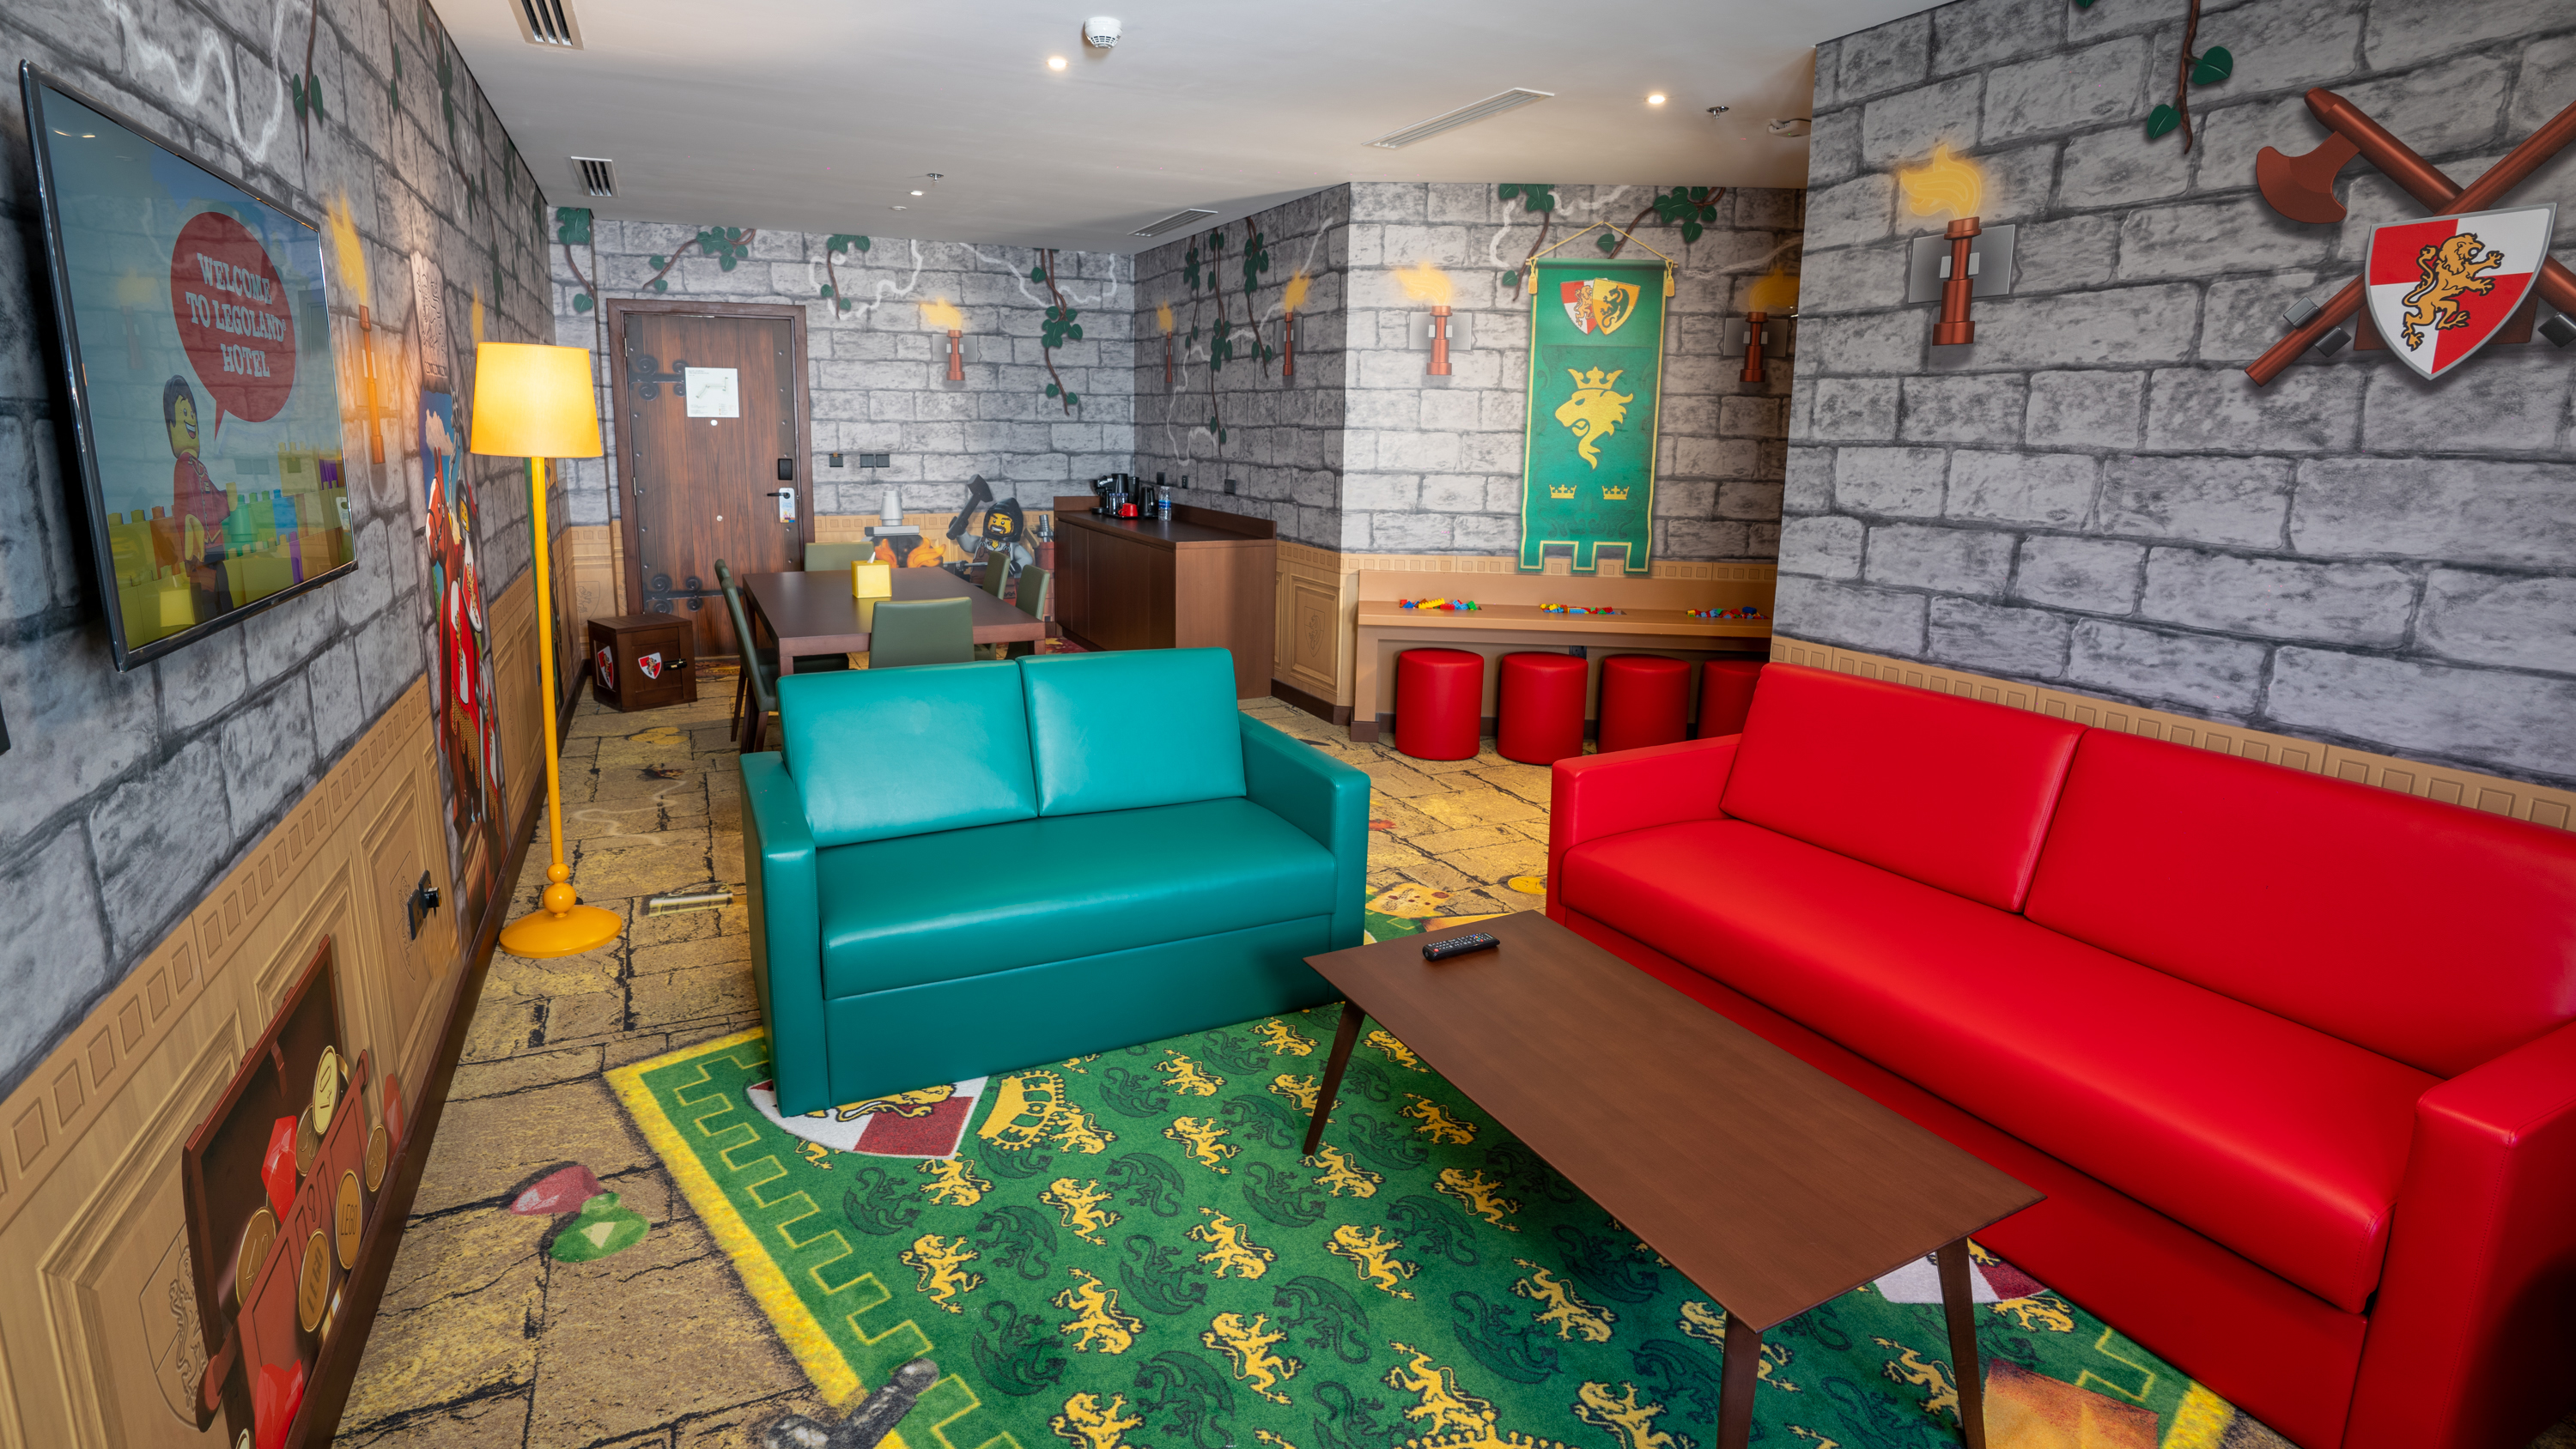 Legoland Hotel Room Interior Kingdom 7(PS)